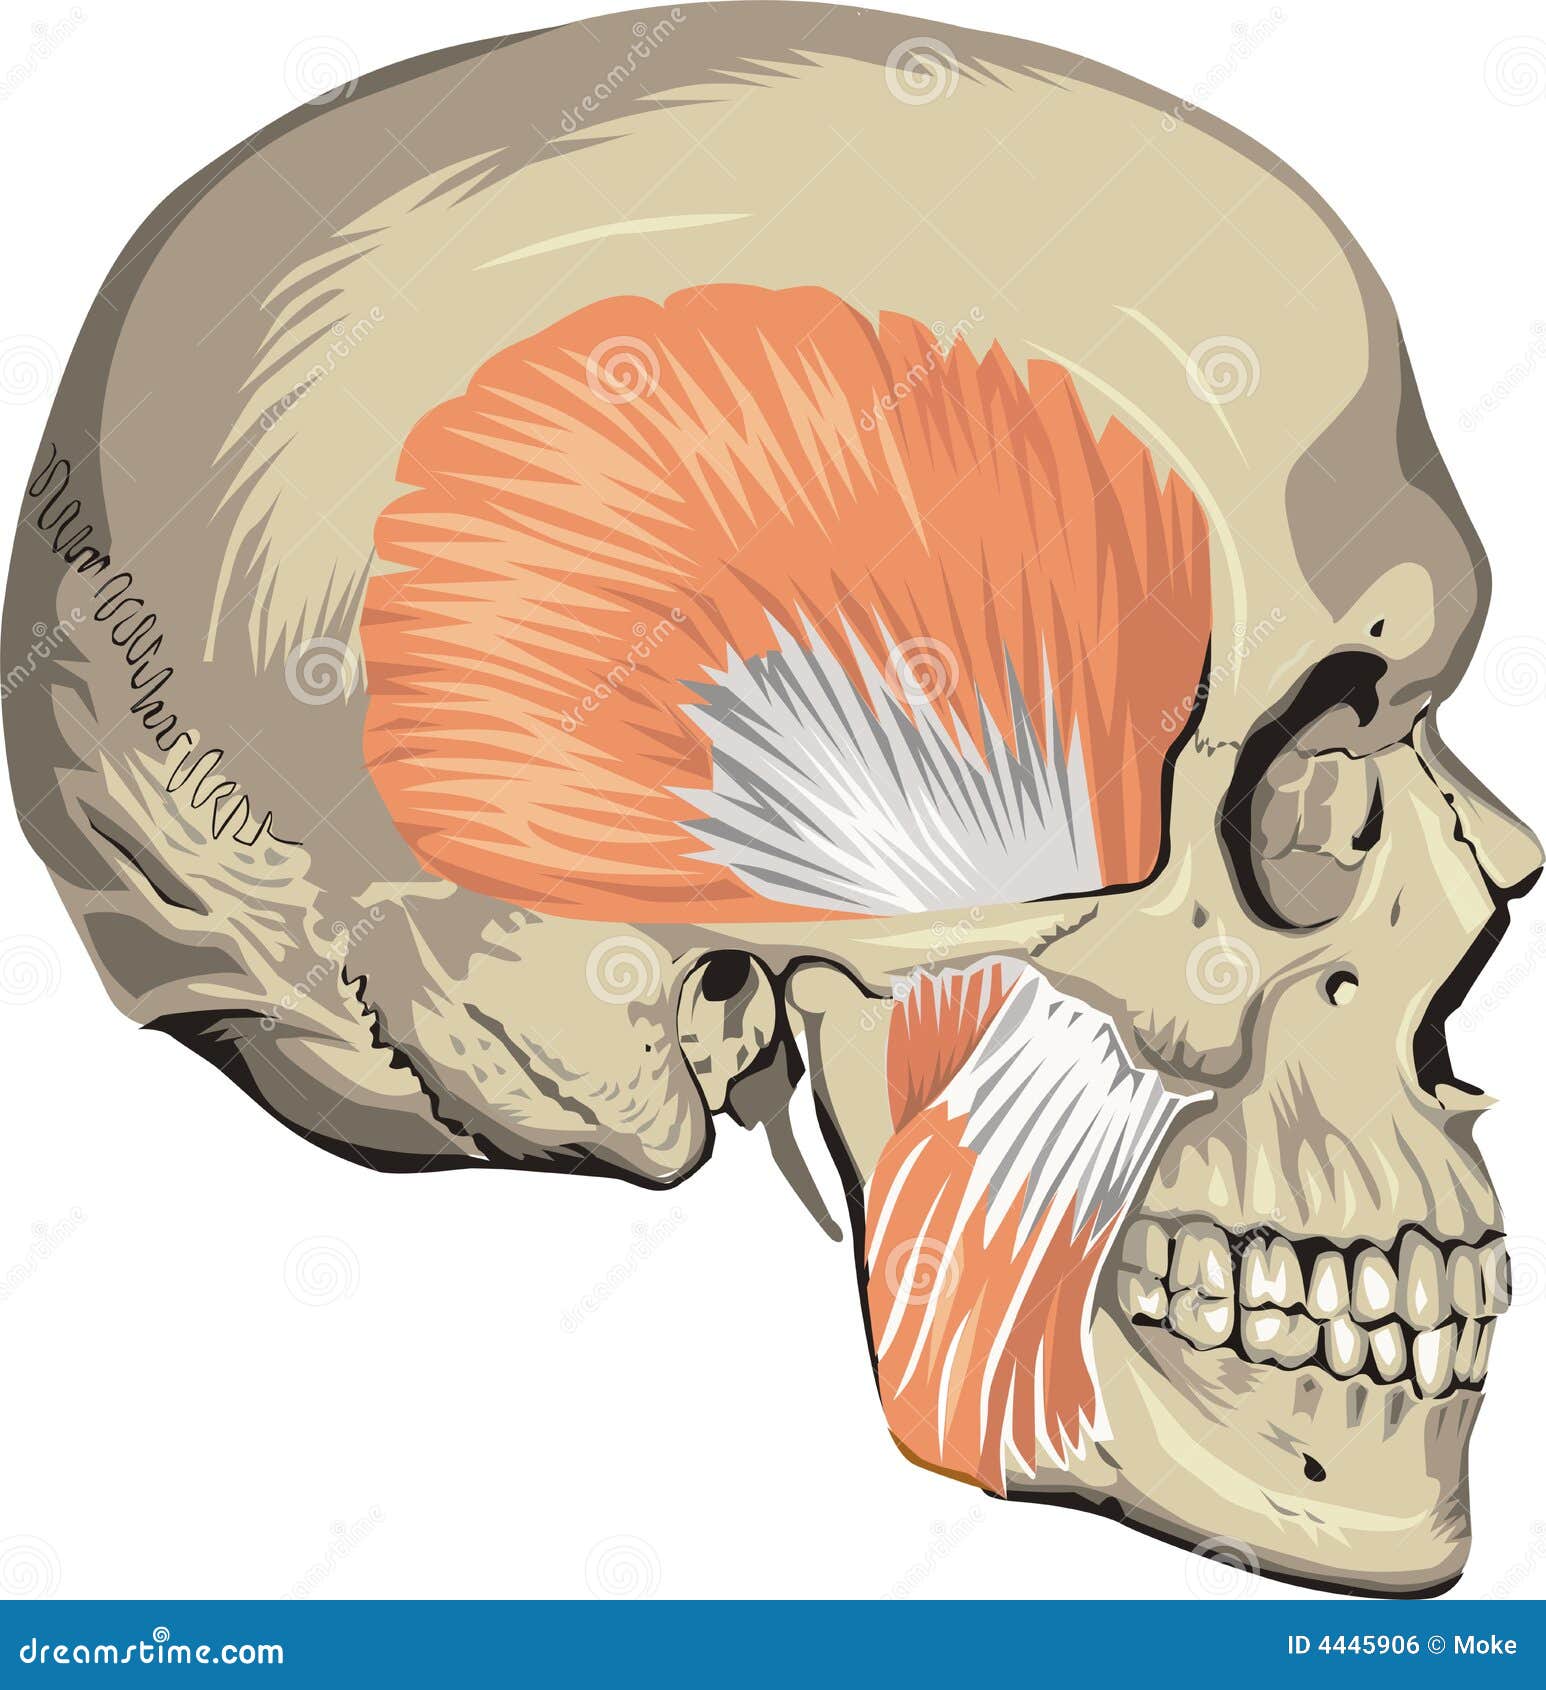 Human skull muscles stock vector. Illustration of background - 4445906